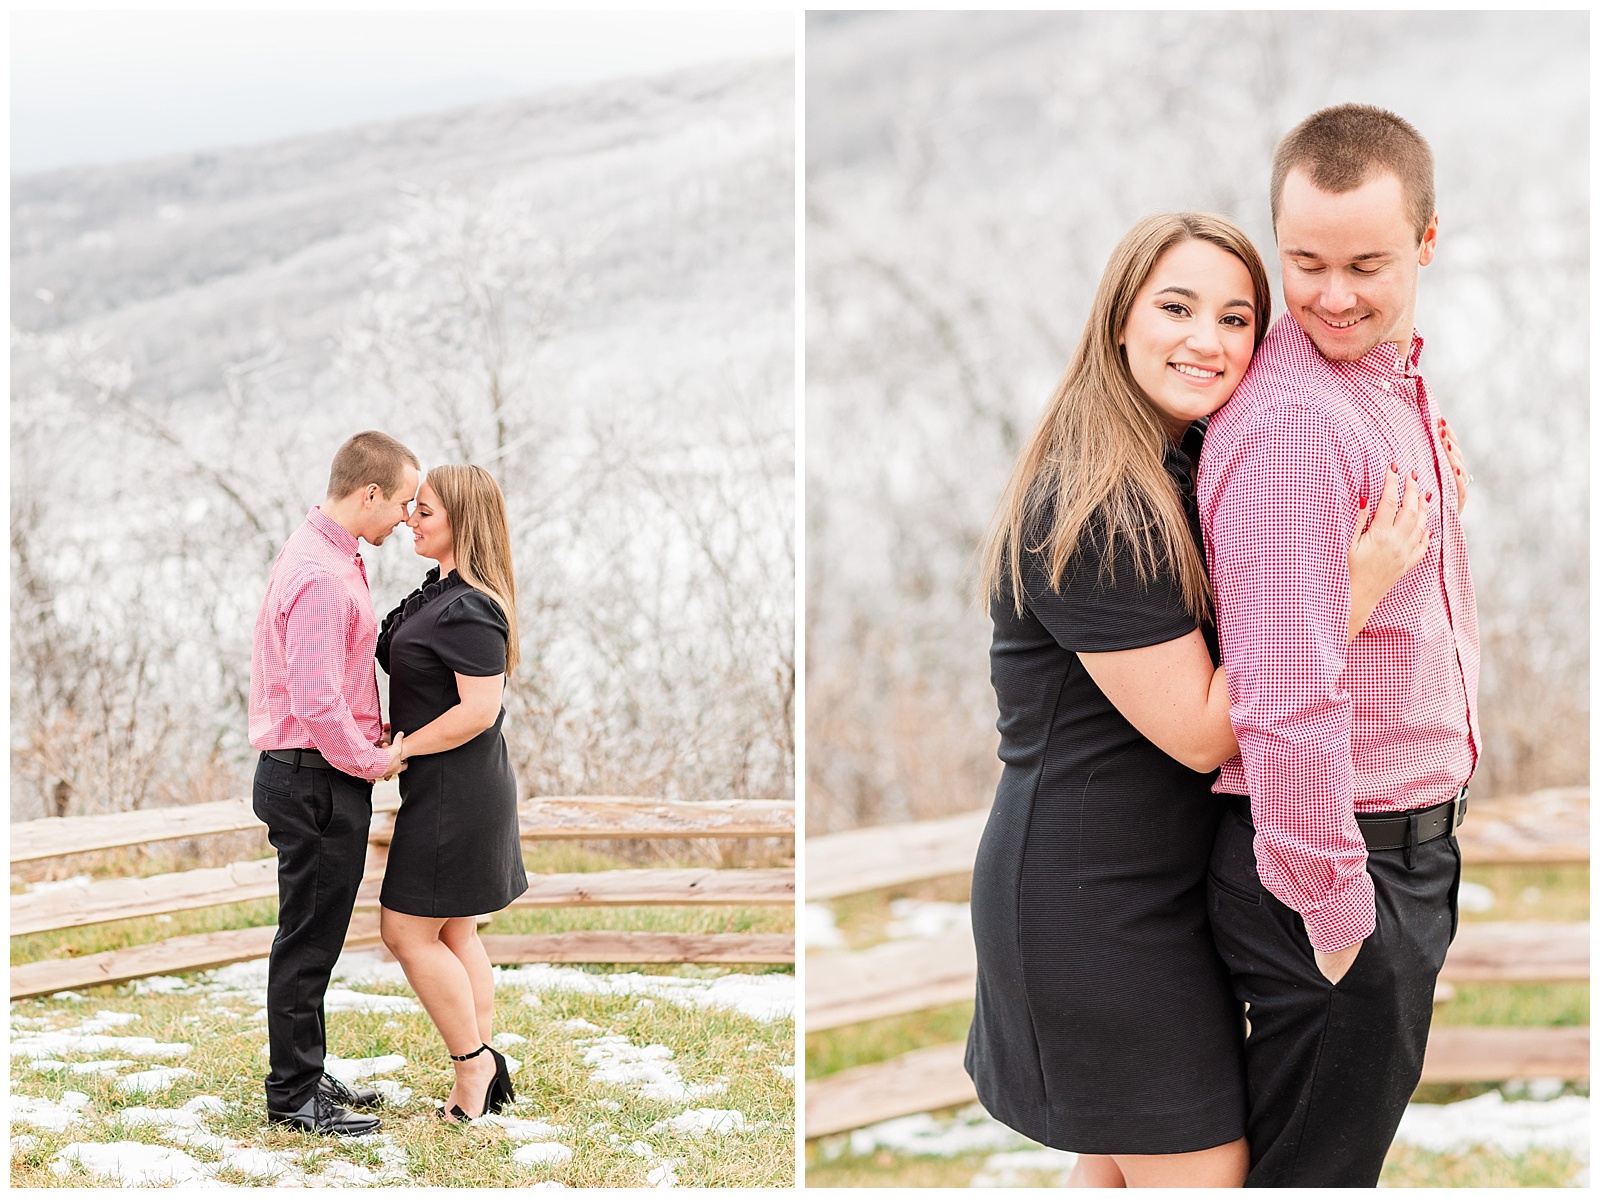 A Snowy Wintergreen Proposal | Sean and Lindsey | Virginia Wedding Photographer29.jpg